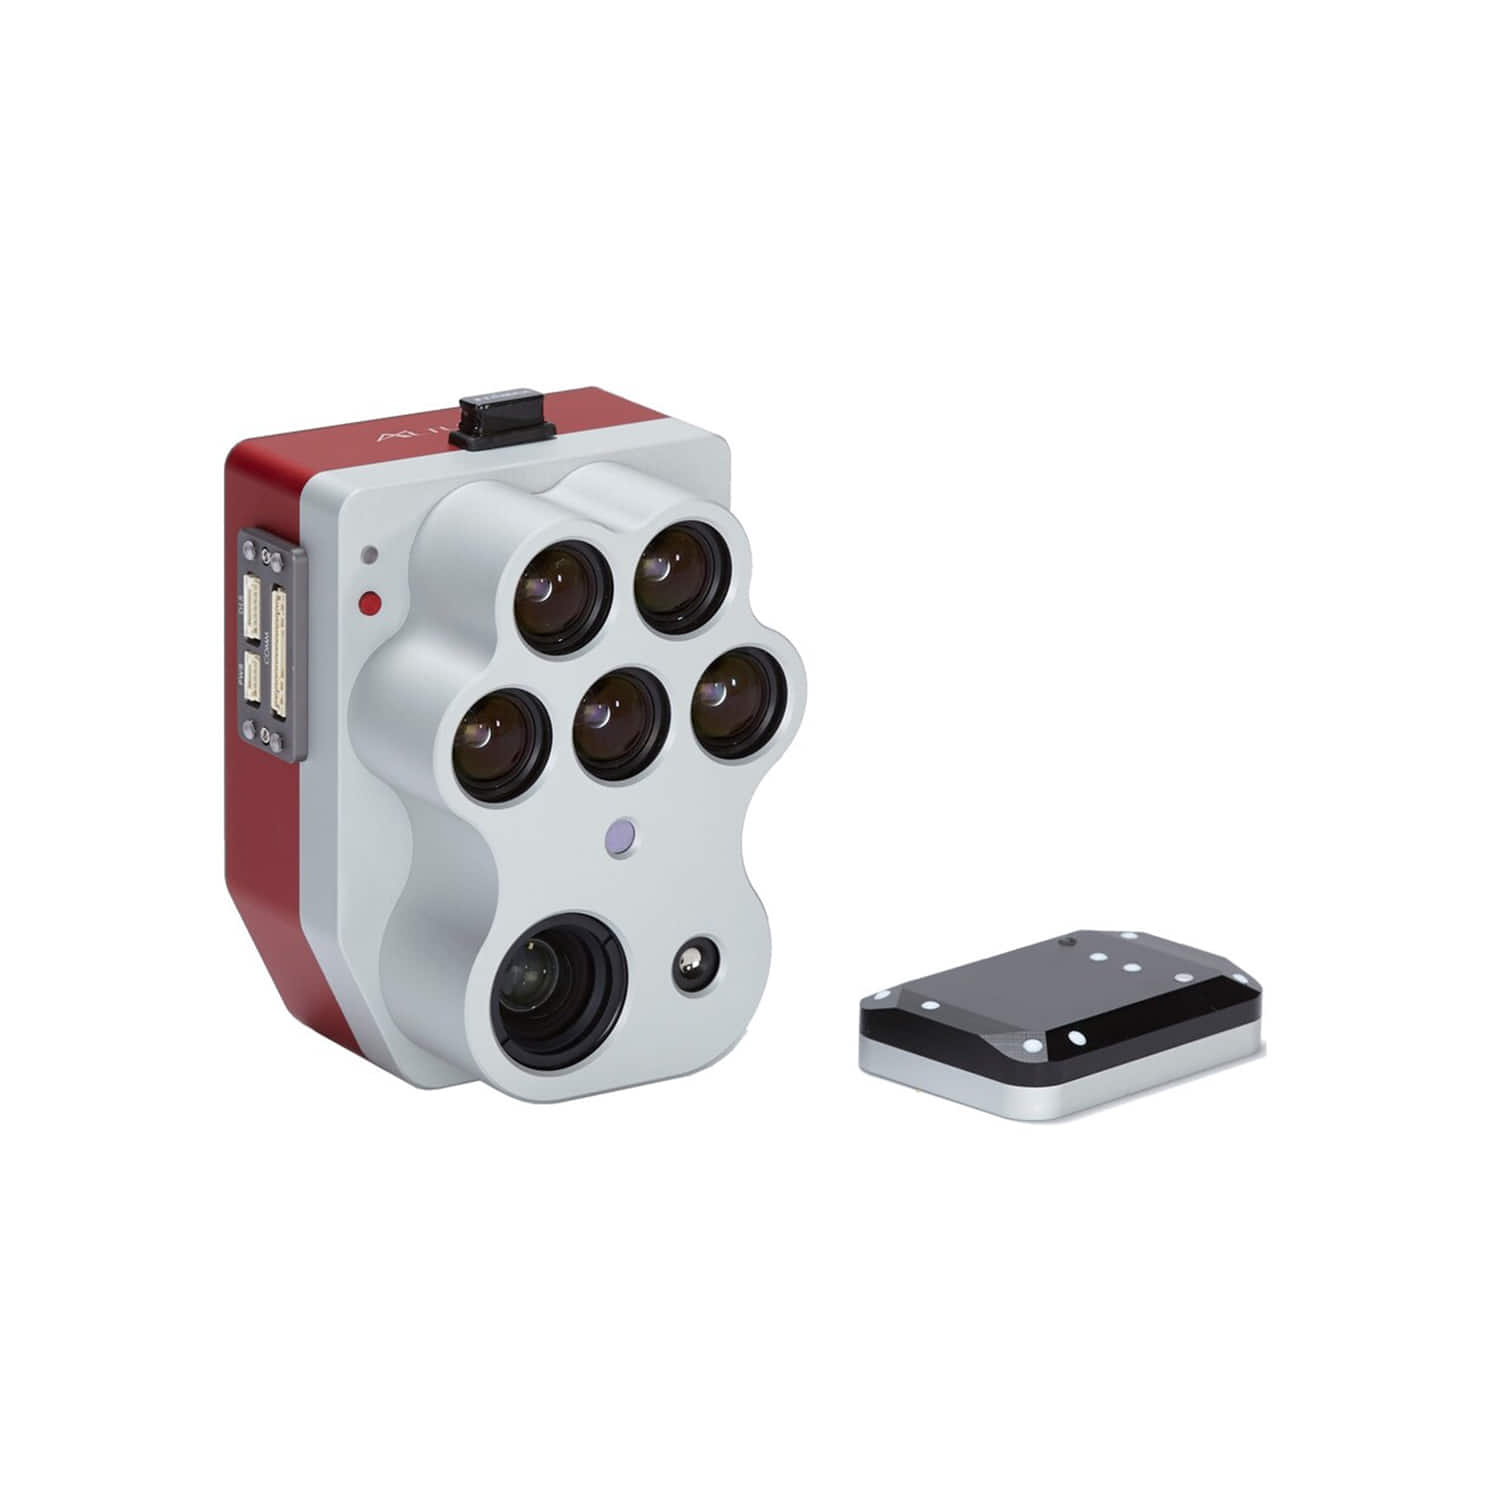 MicaSense Altum-PT Sensor kit with DJI skyport다분광 카메라 | 수분스트레스검사 헬셀